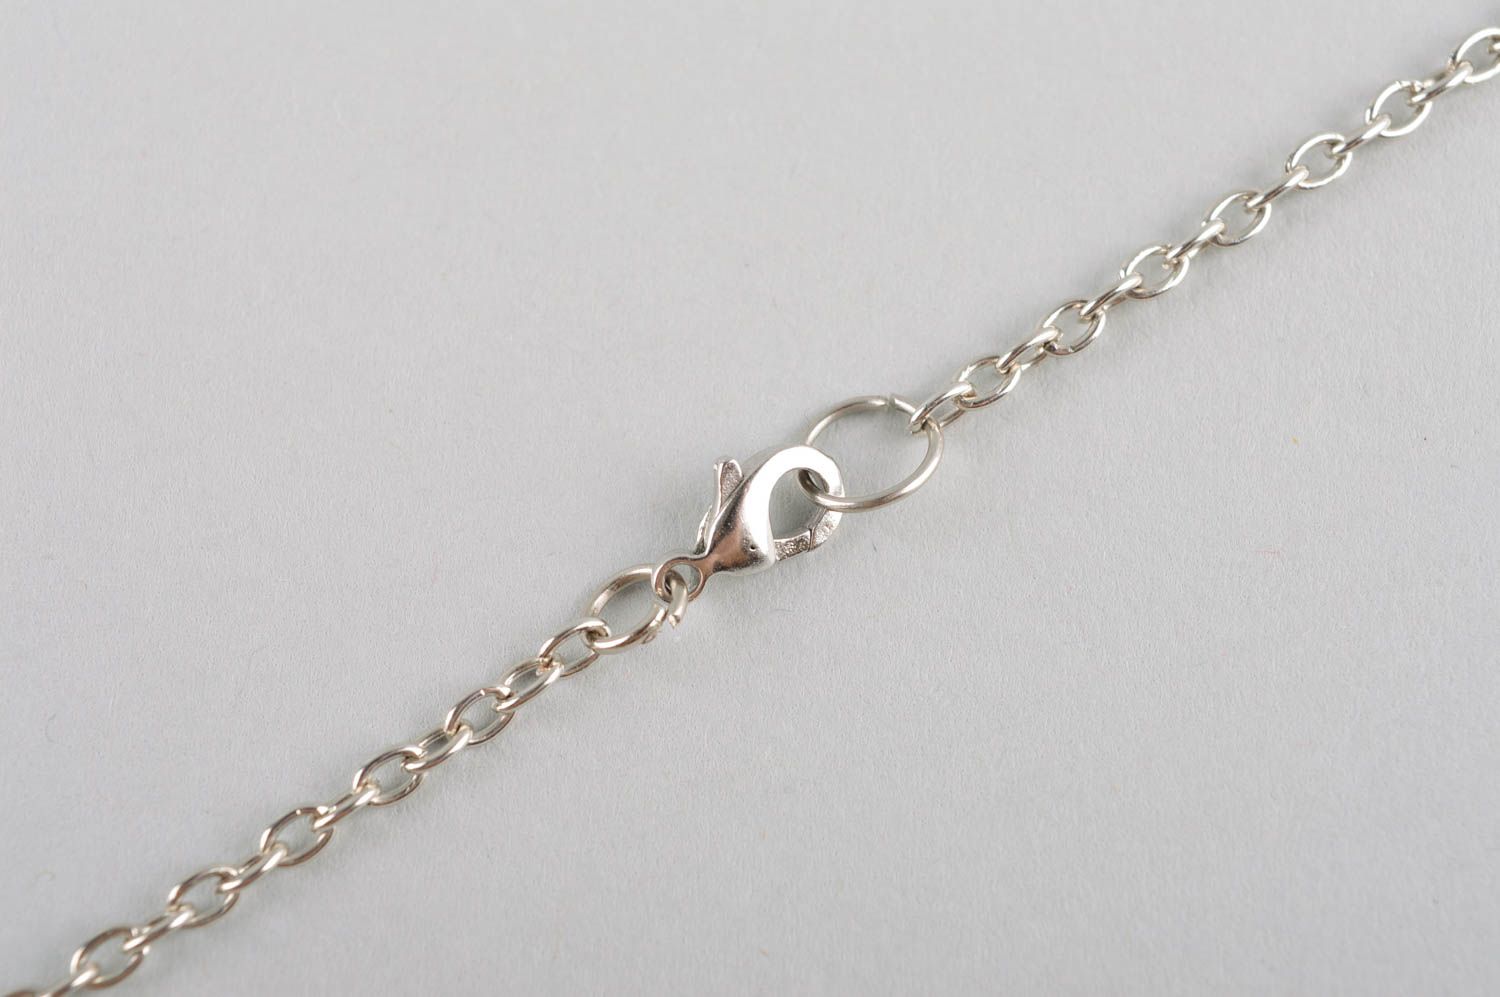 Chain pendant handmade wooden pendant fashion jewelry stylish pendant for women photo 5